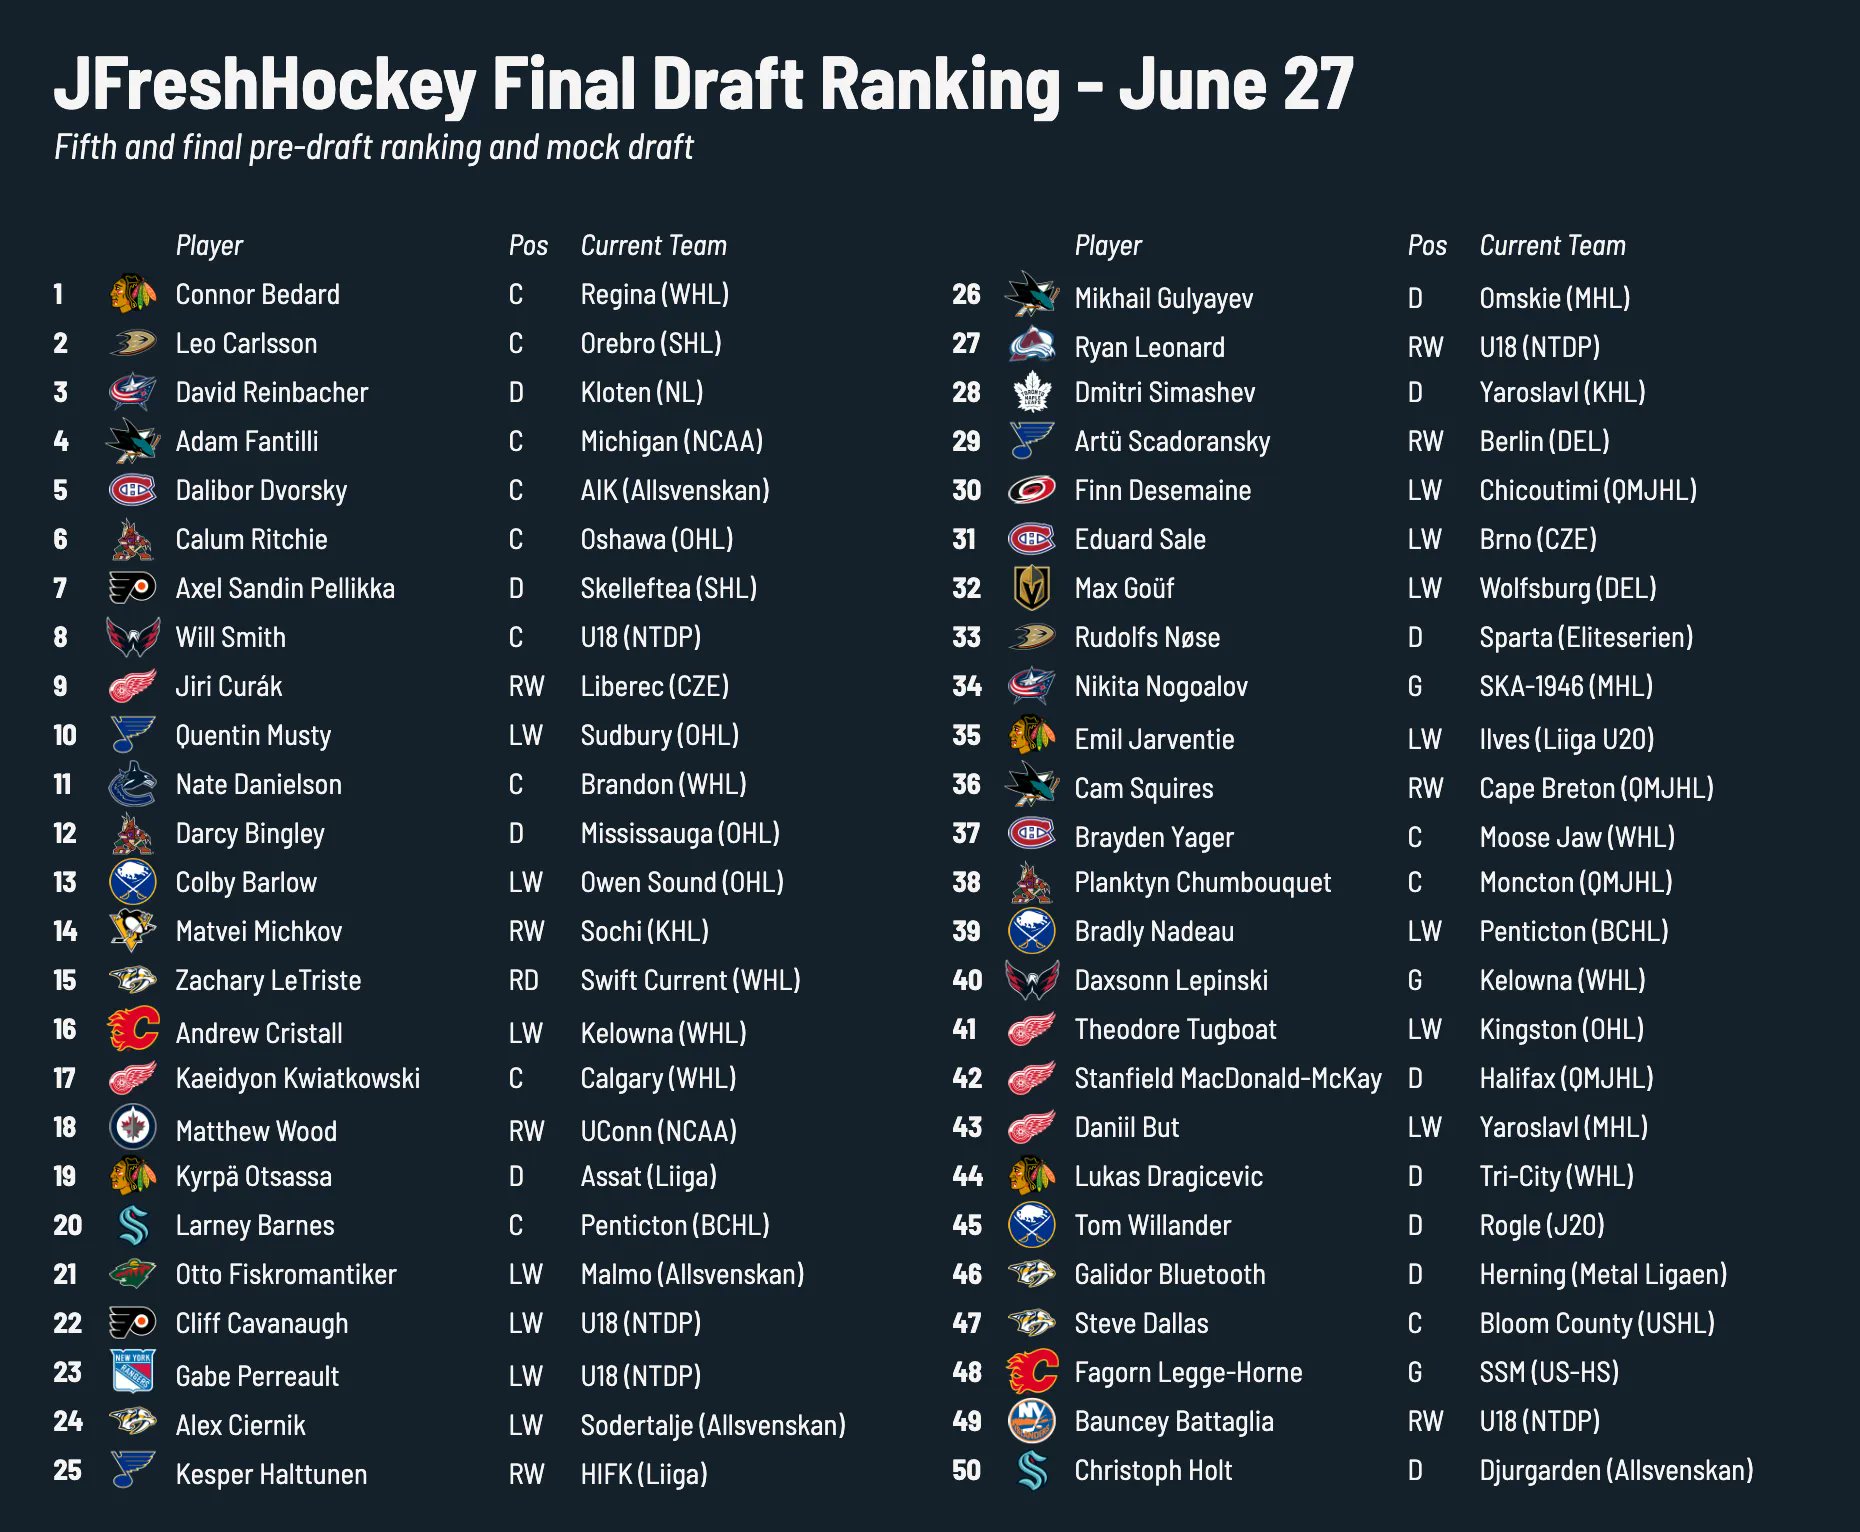 mock draft rankings